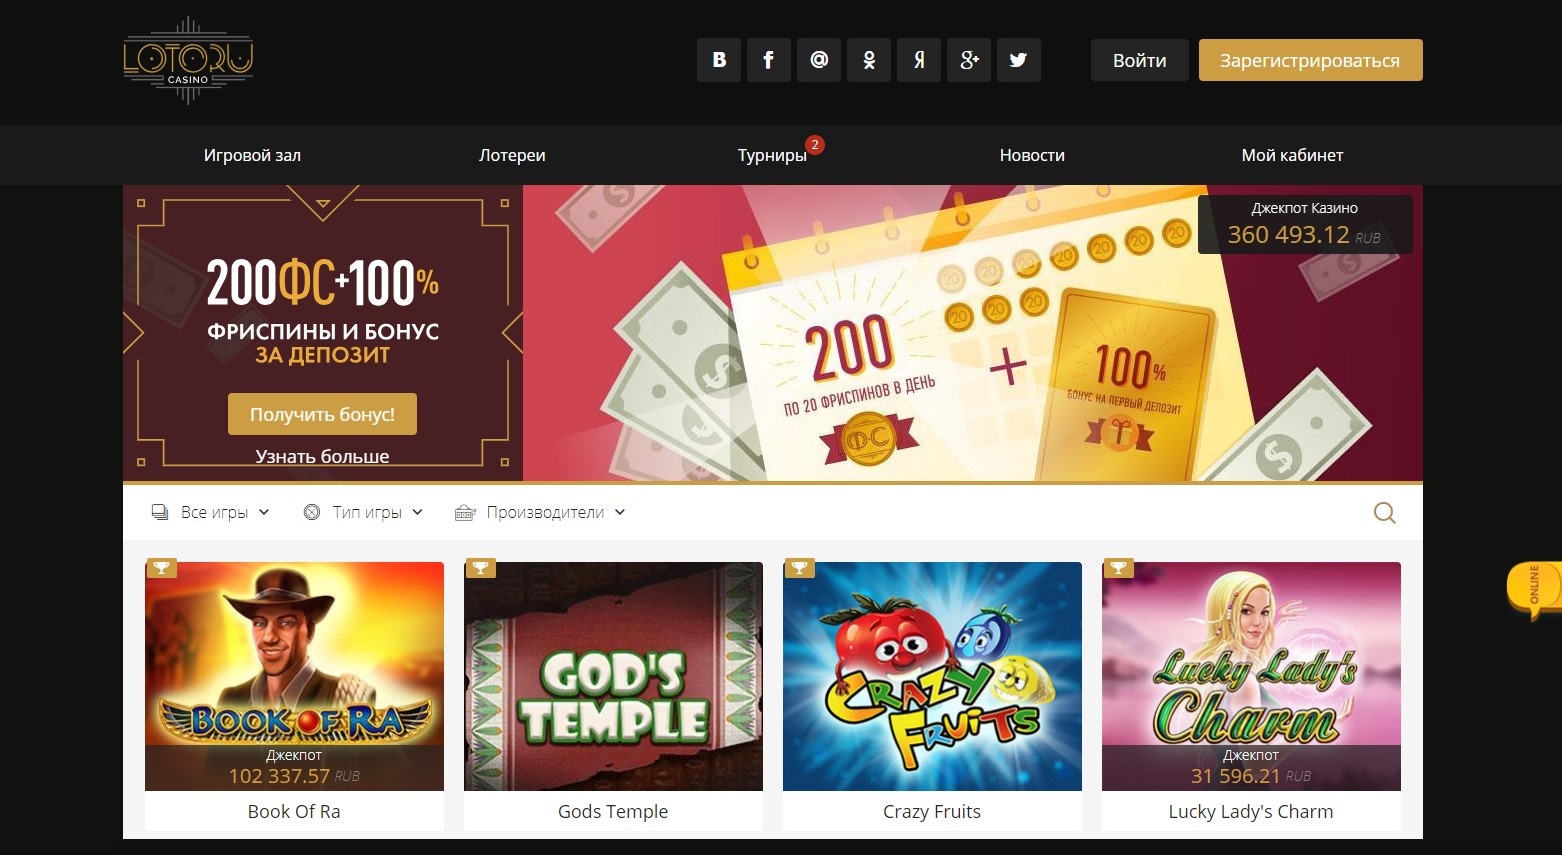 Интерфейс онлайн-казино LotoRu